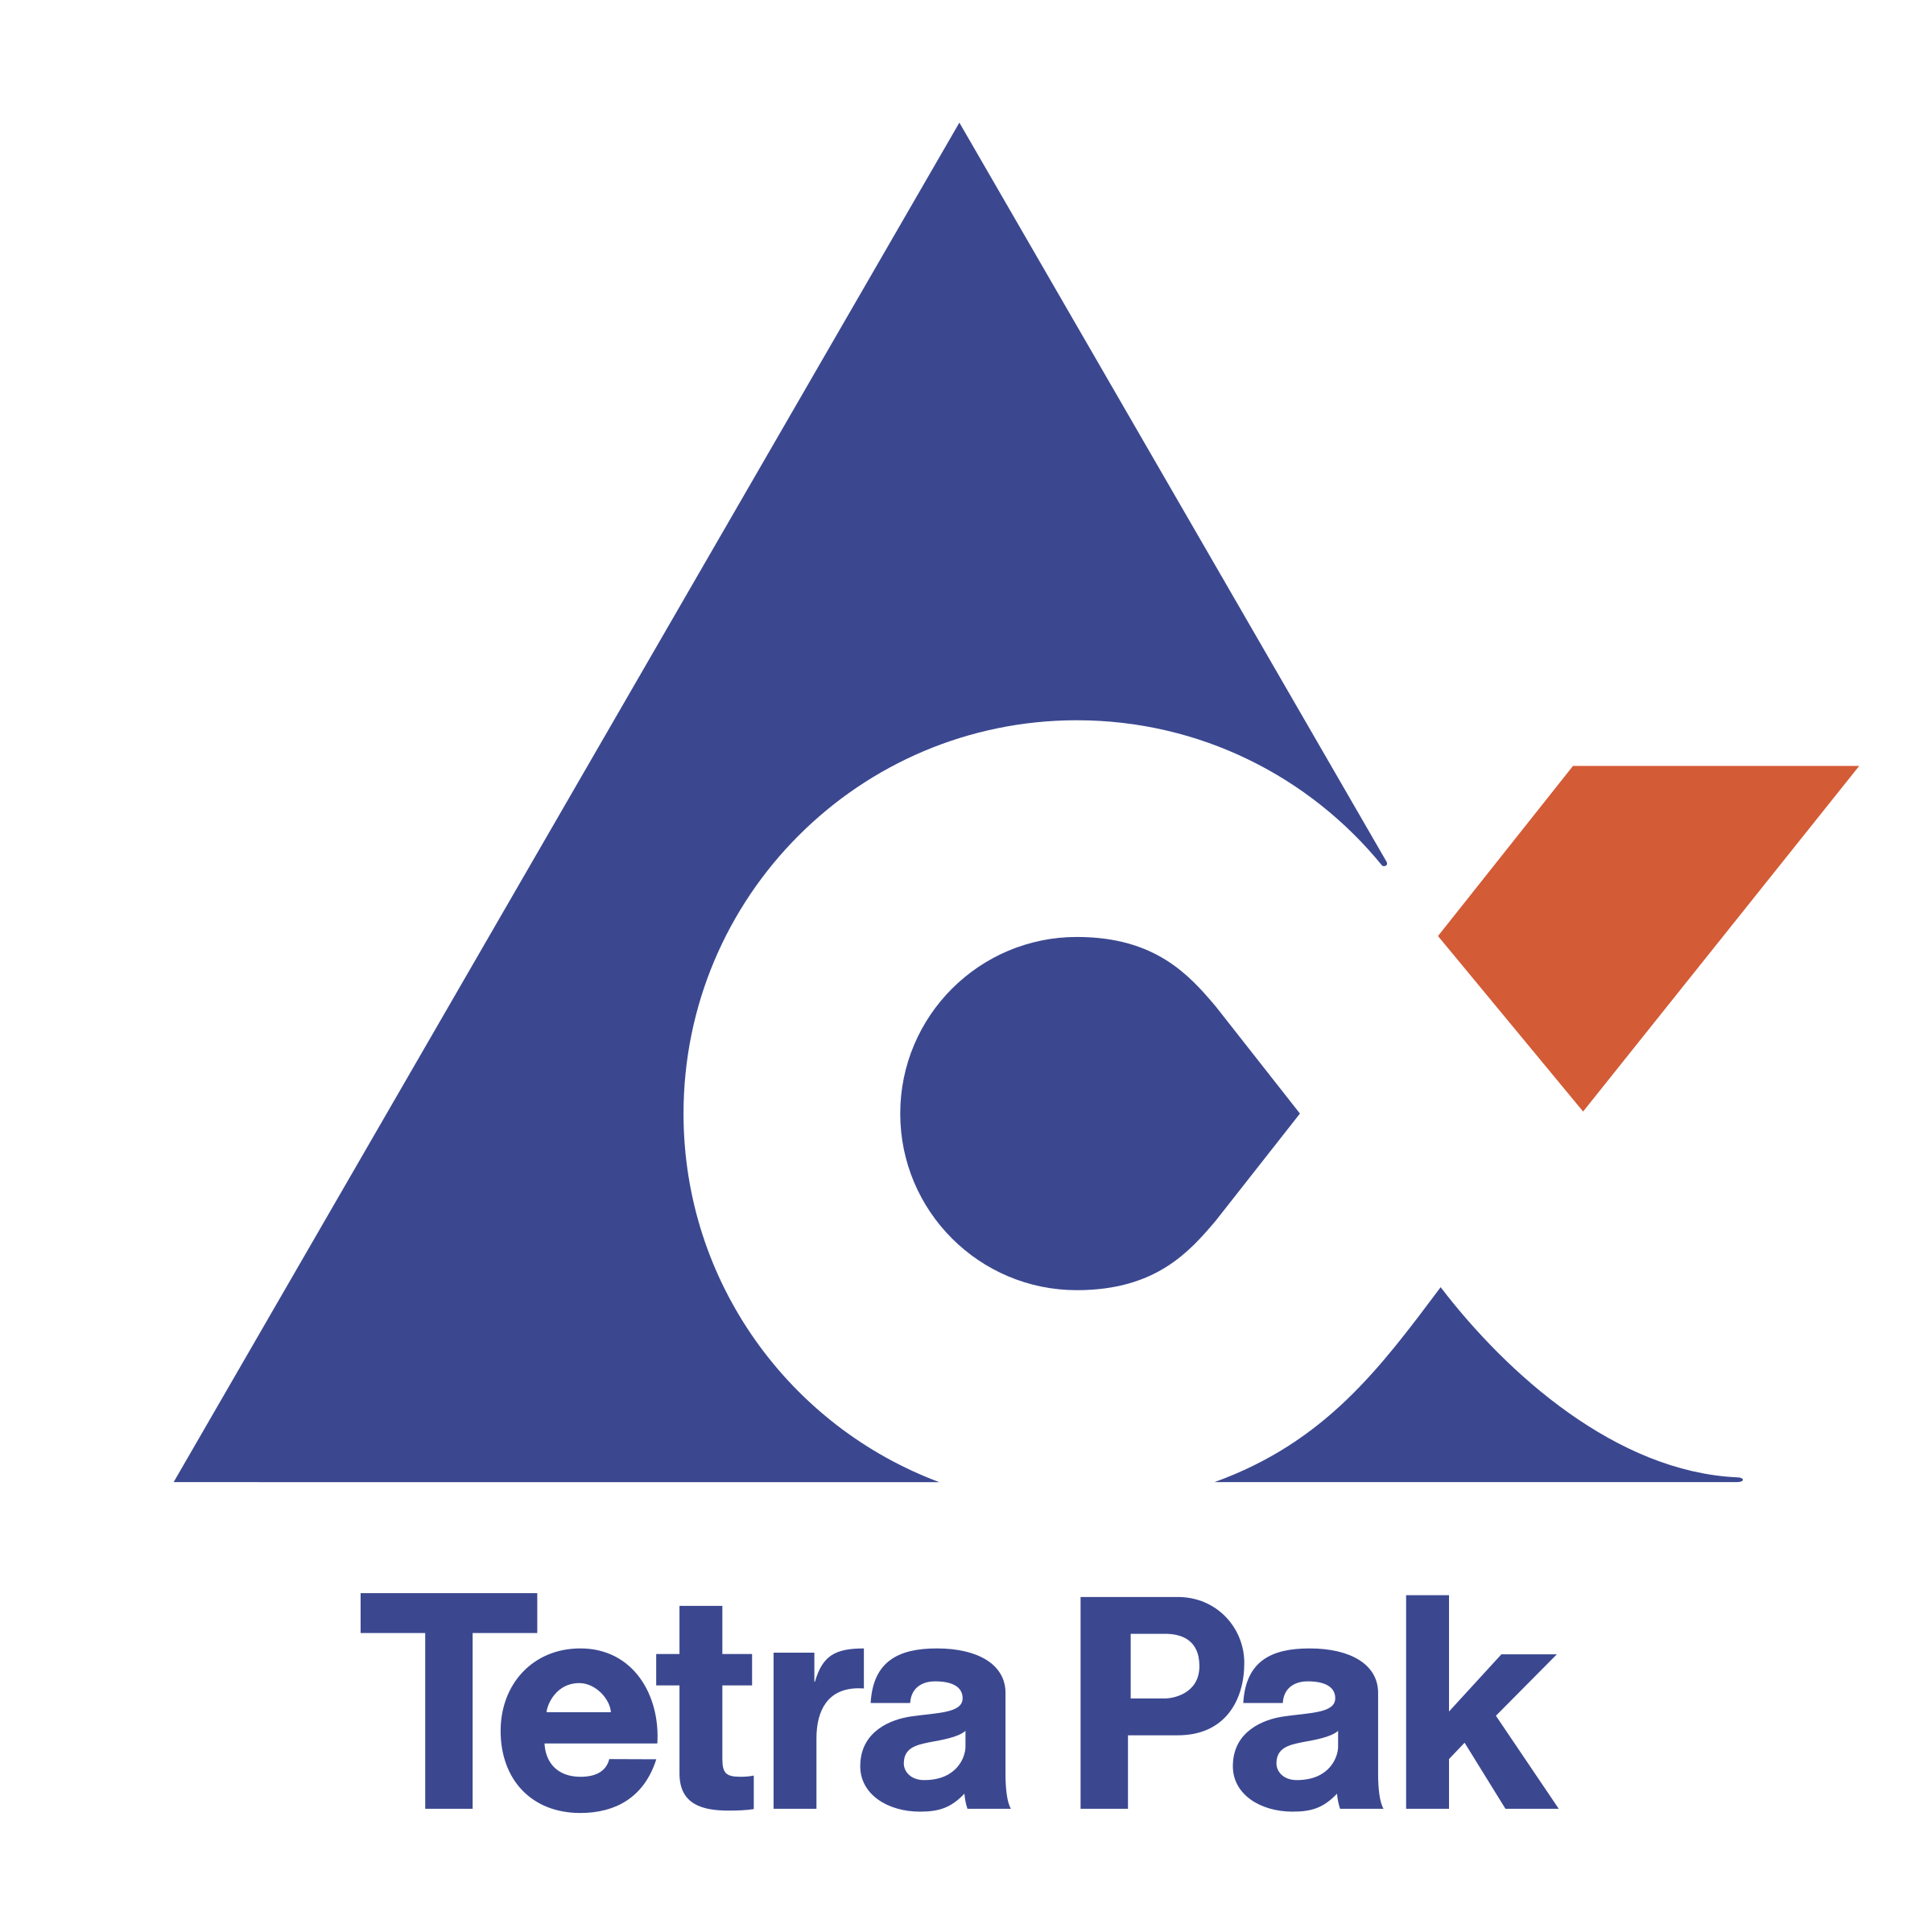 Tetra Logo - Tetra Pak Logo PNG Transparent & SVG Vector - Freebie Supply